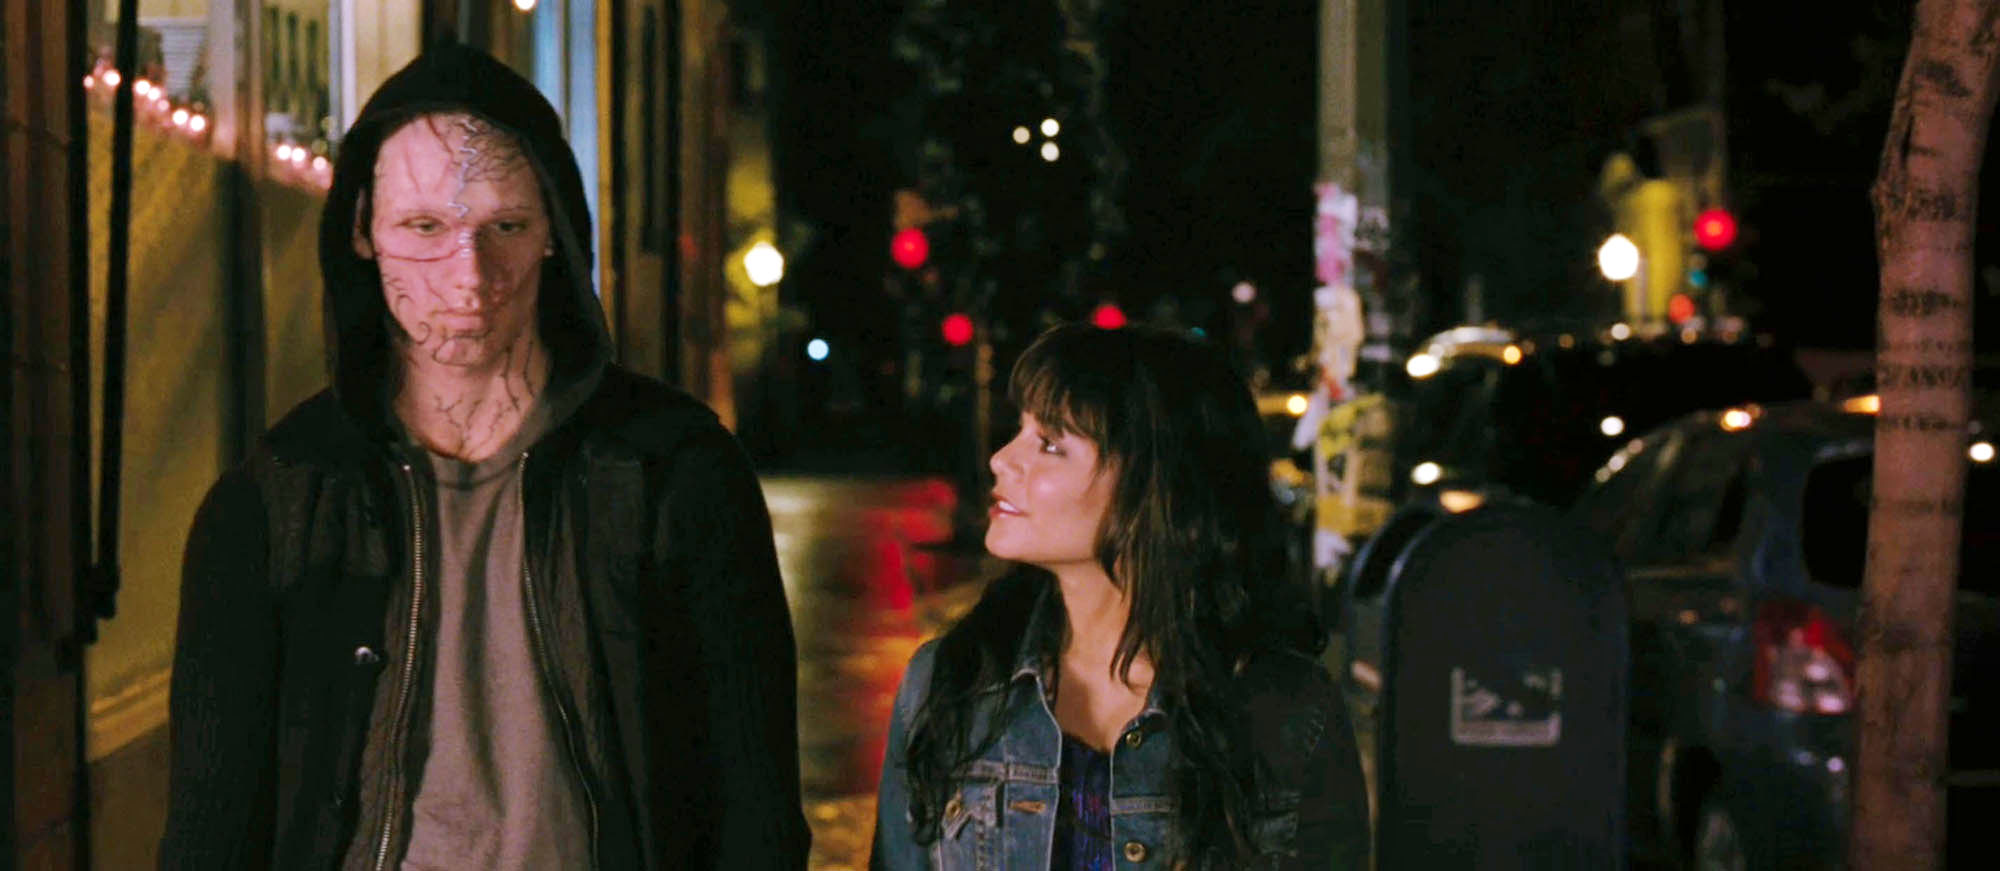 Alex Pettyfer stars as Kyle Kingson and Vanessa Hudgens stars as Linda Taylor in CBS Films' Beastly (2011)